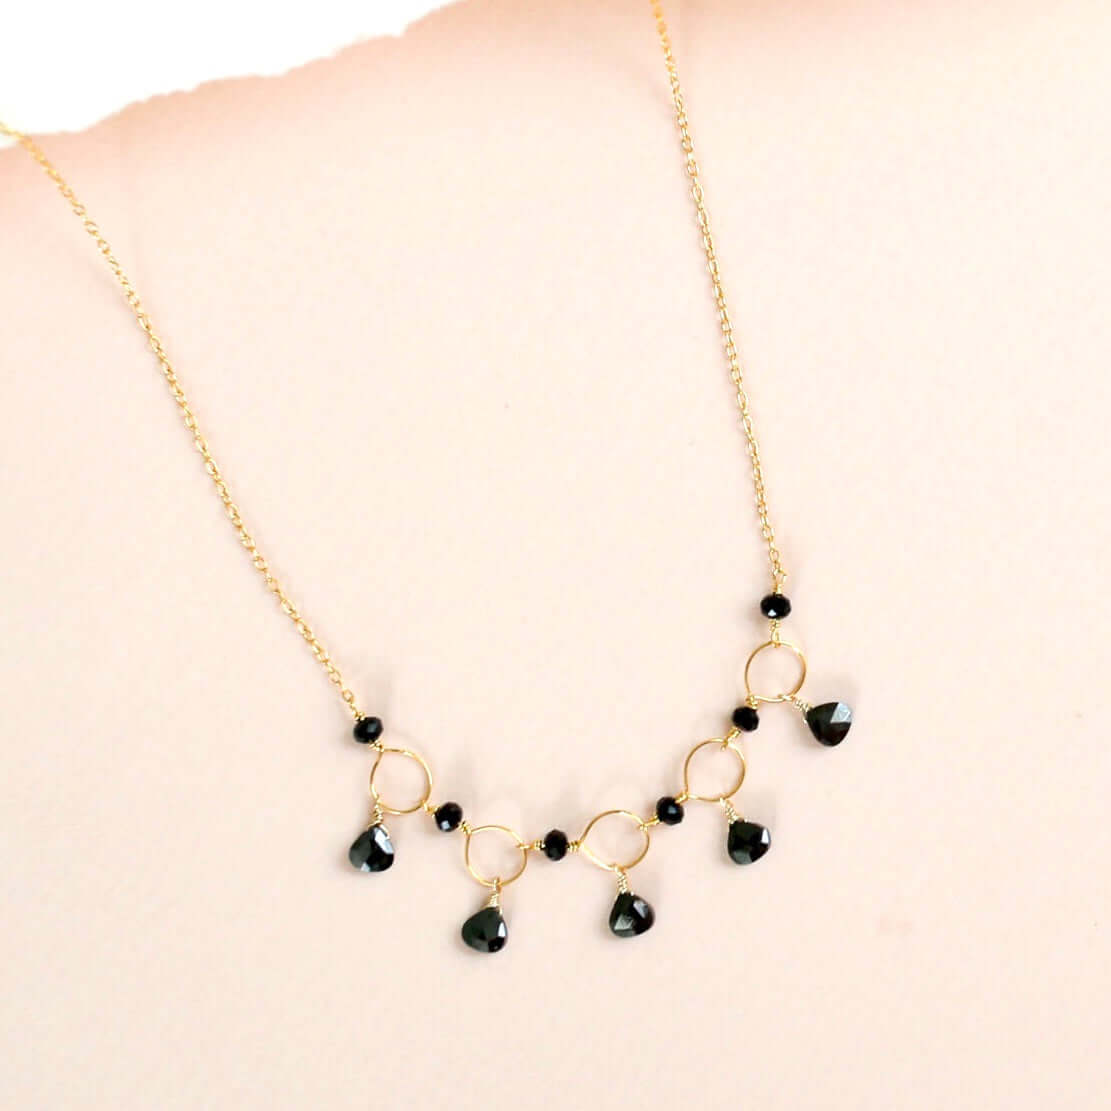 Adjustable Black Spinel Gemstone Chain Necklace